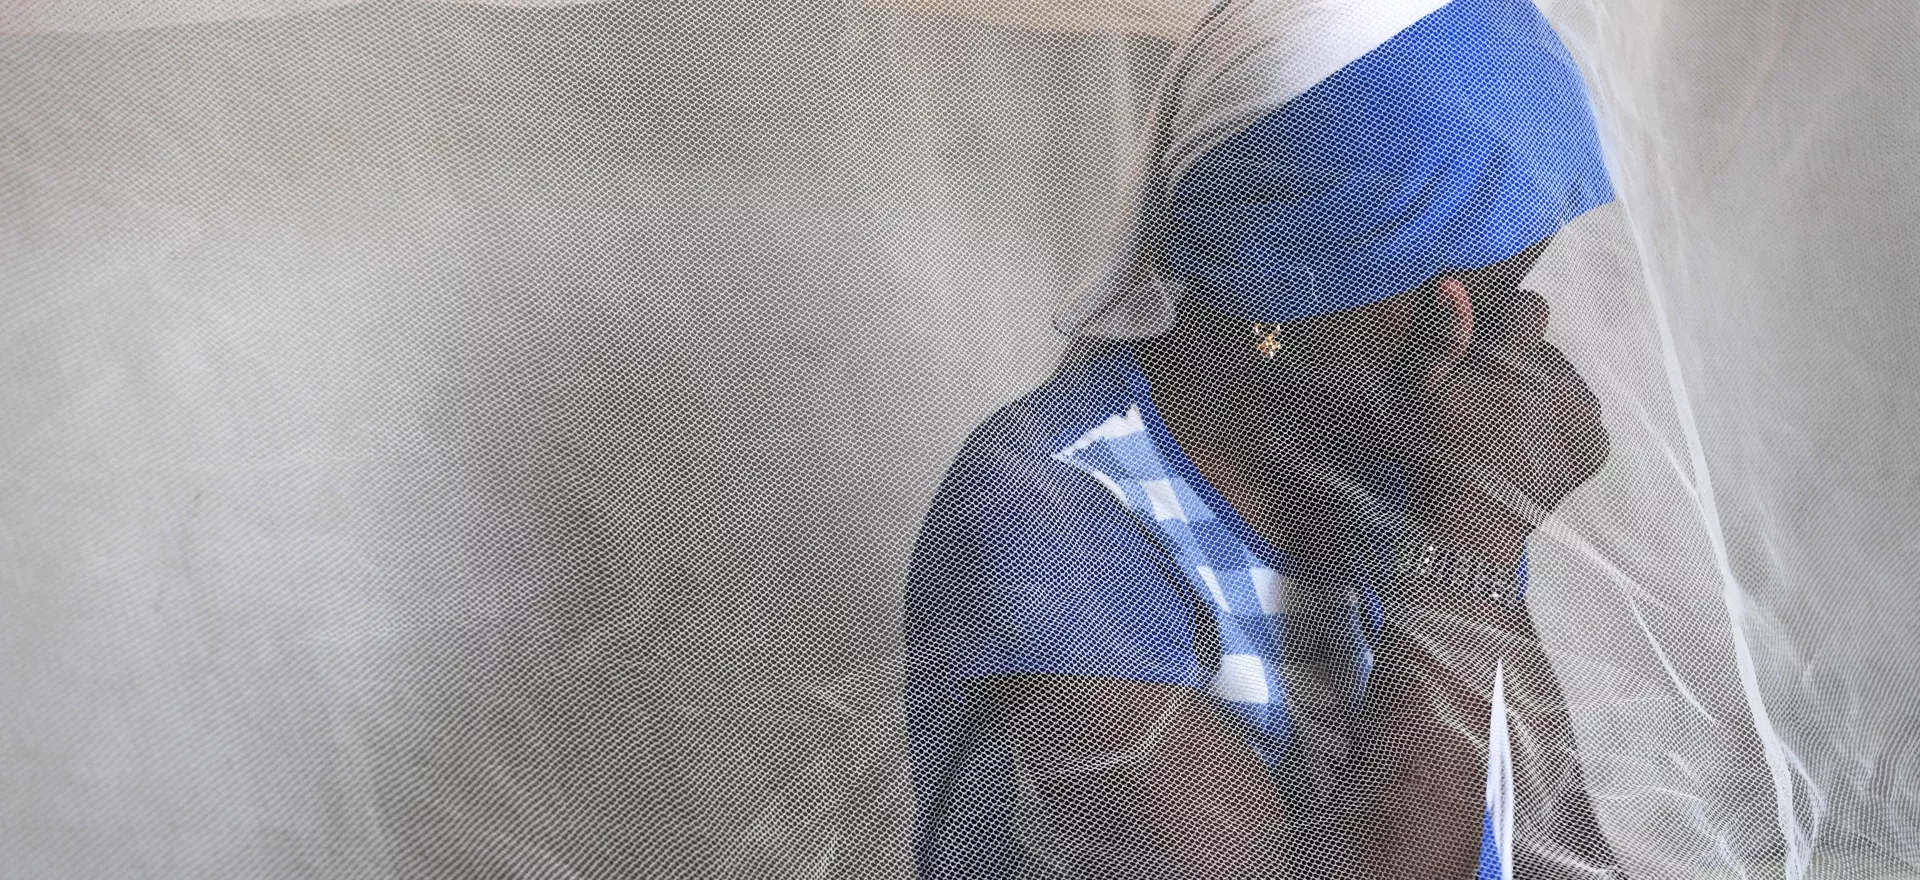 a 15-year-old girl in Ouagadougou, the capital of Burkina Faso